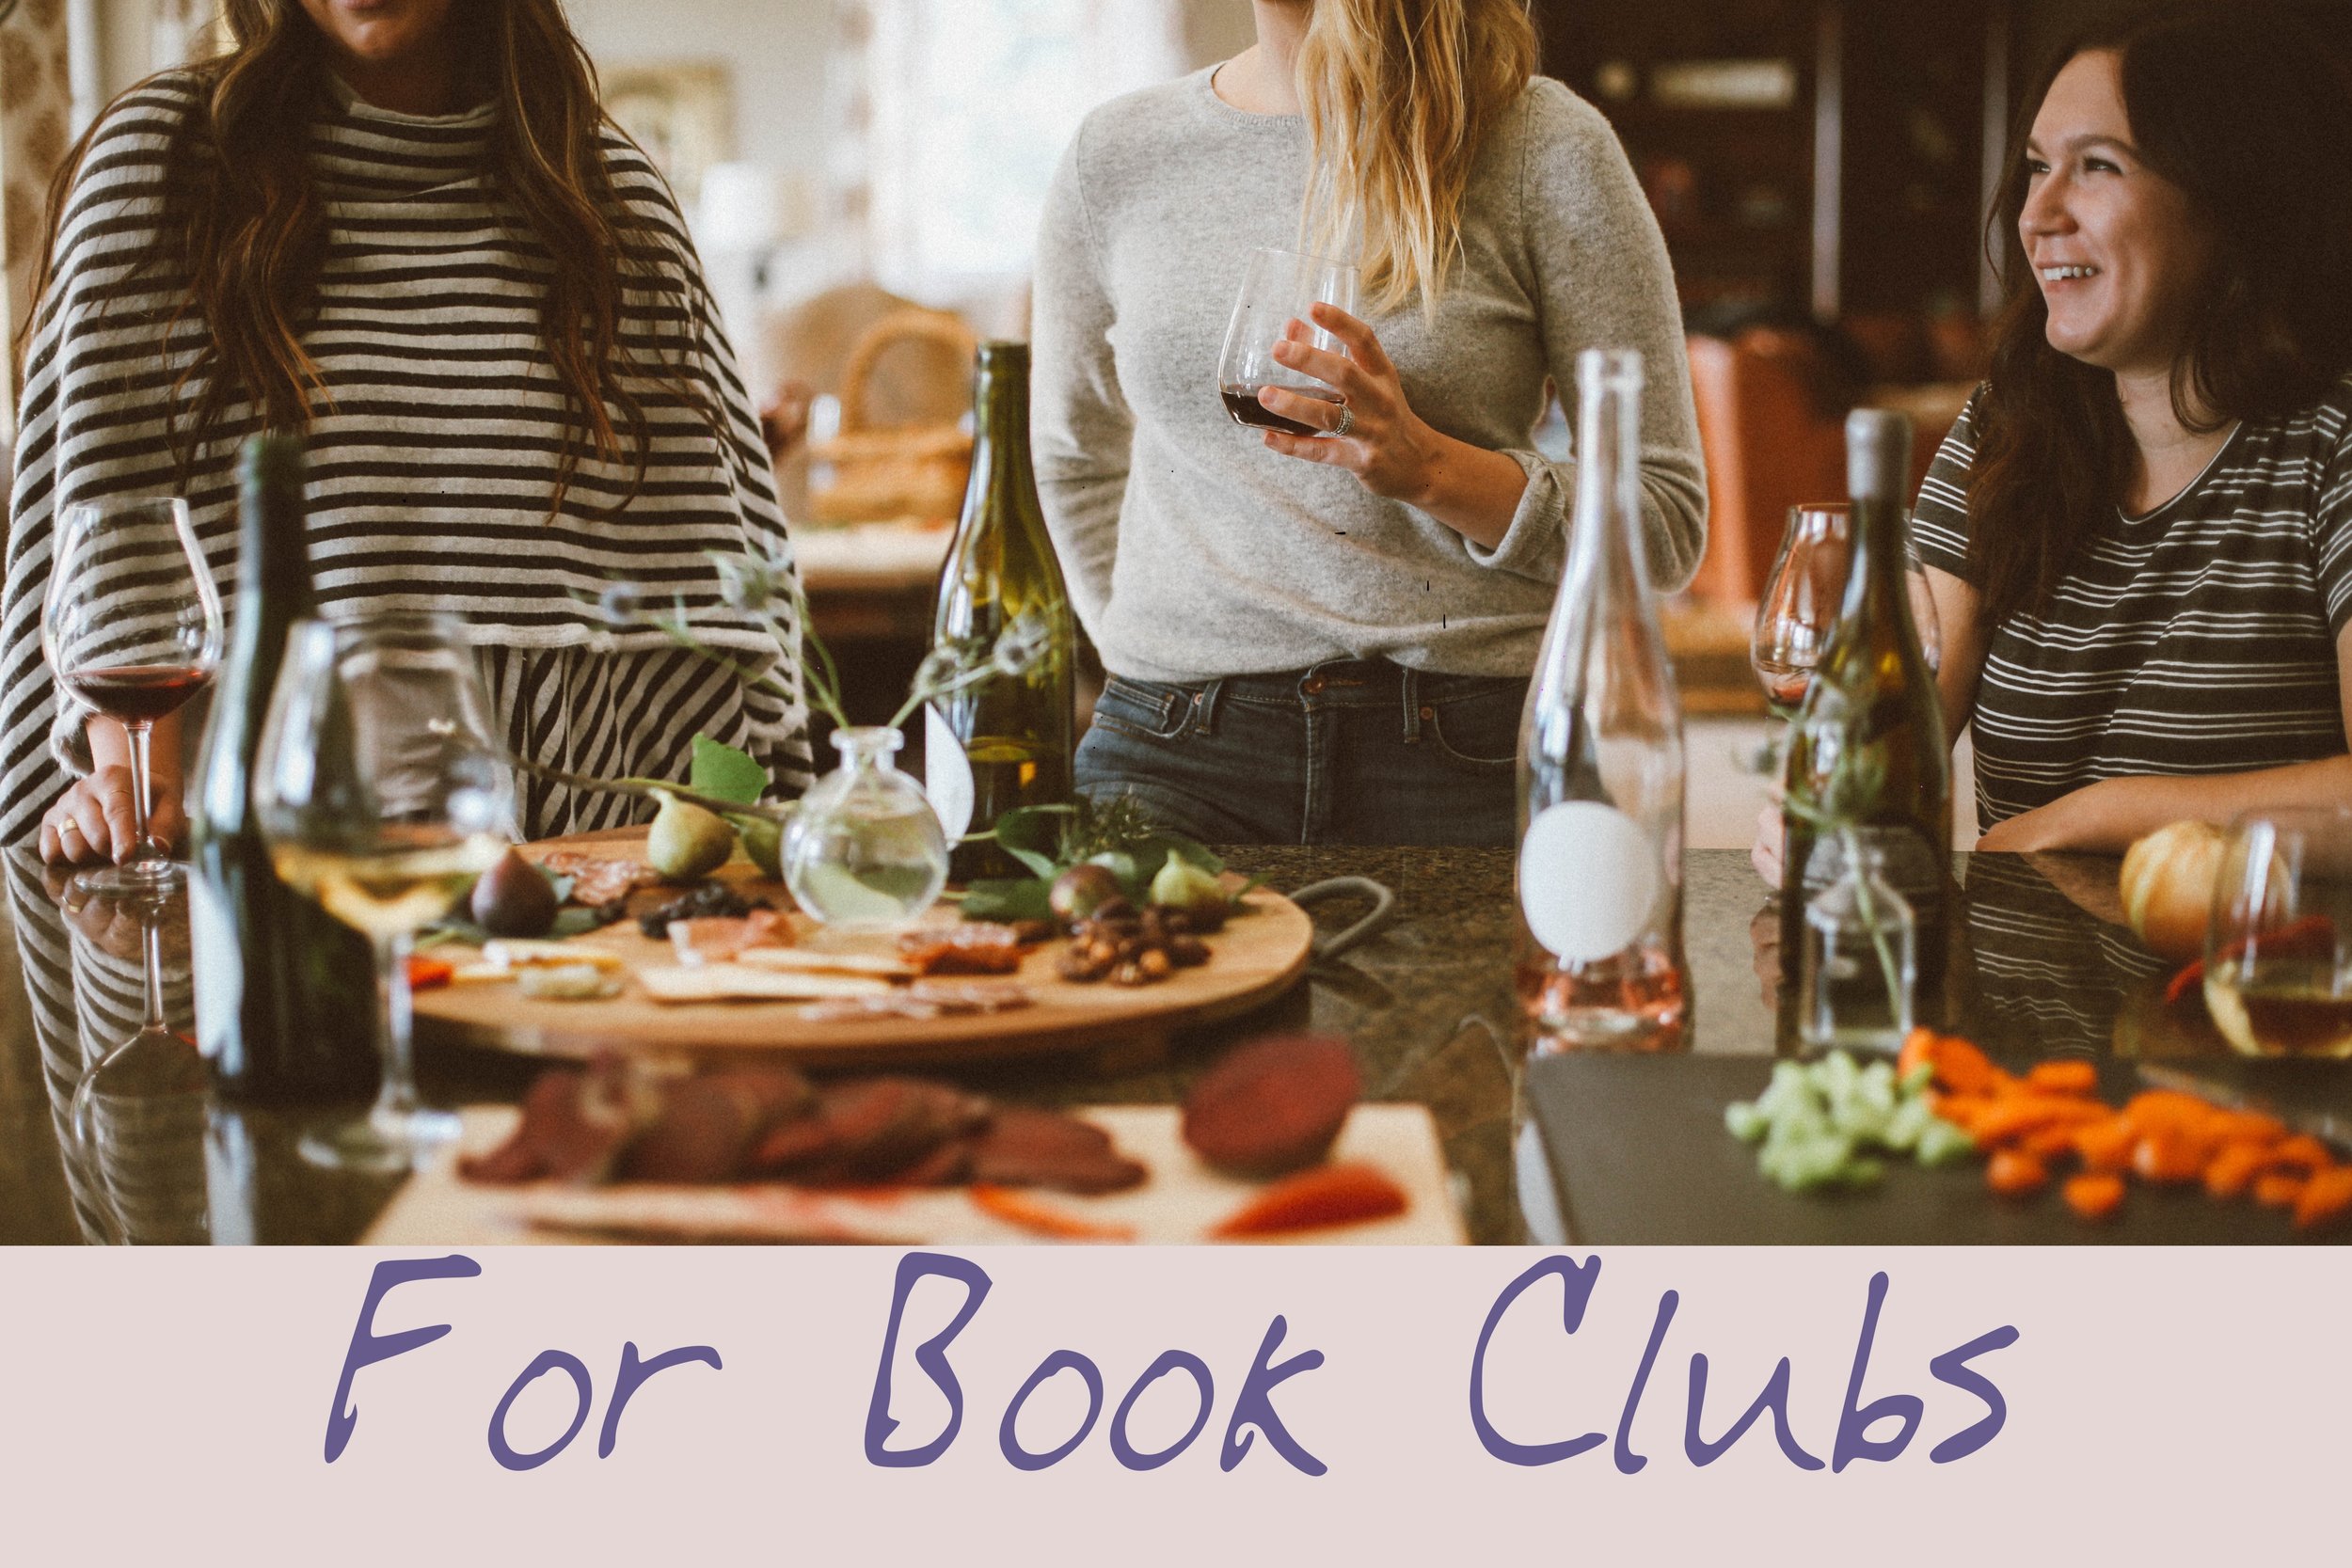 Book Club Questions